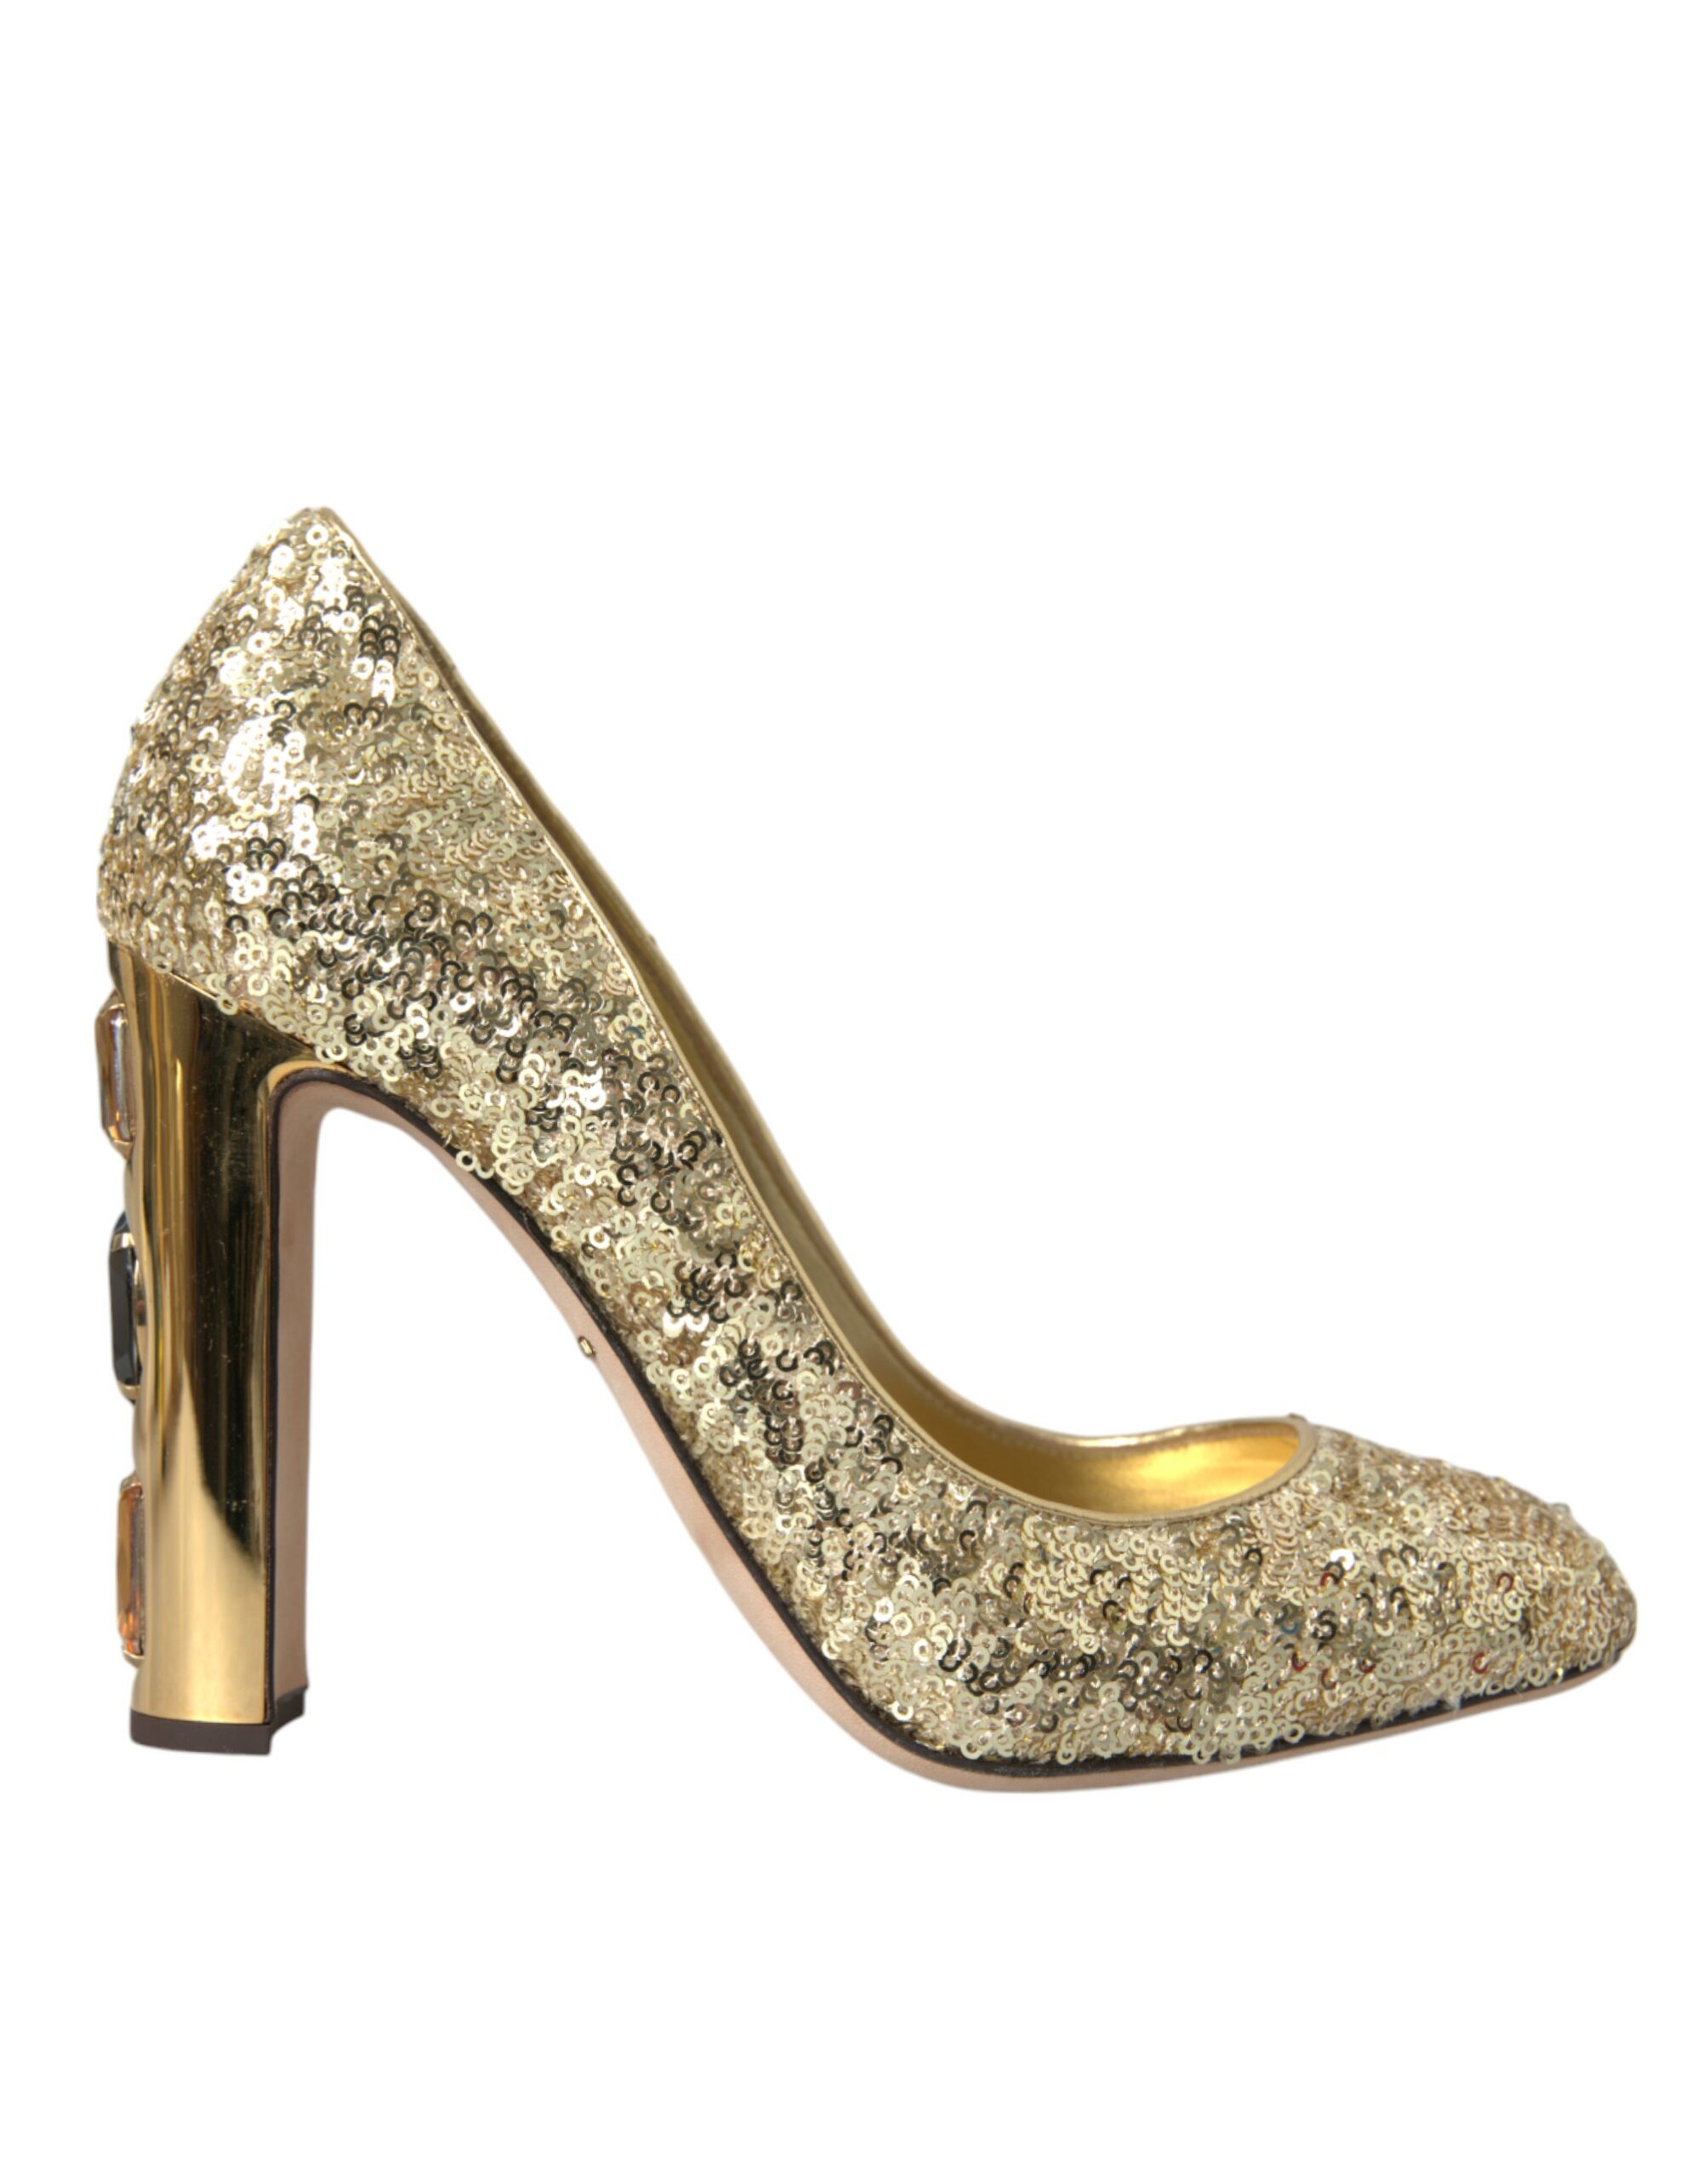 Dolce & Gabbana Gold Sequin Crystal Heels Pumps Shoes EU39.5/US9 Gold